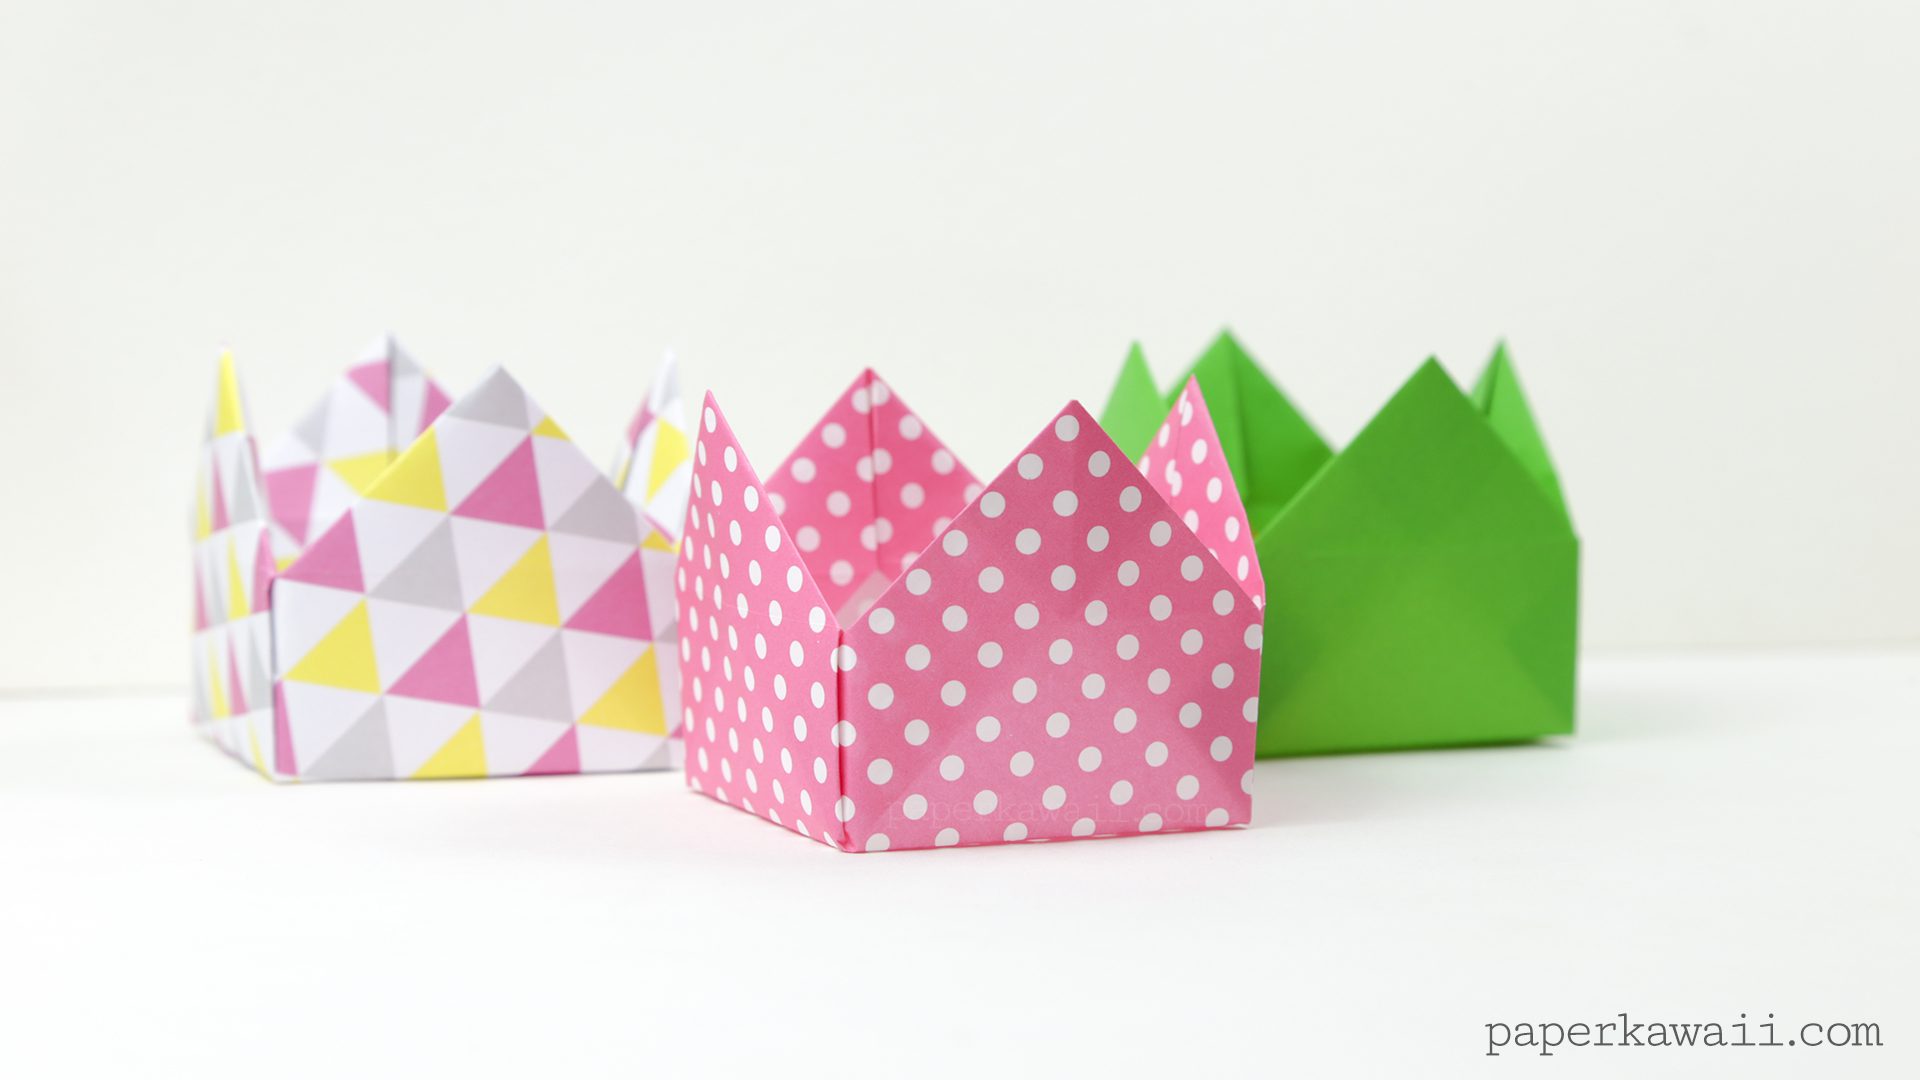 origami crown box or lid tutorial #origami #crafts #crown #party #diy